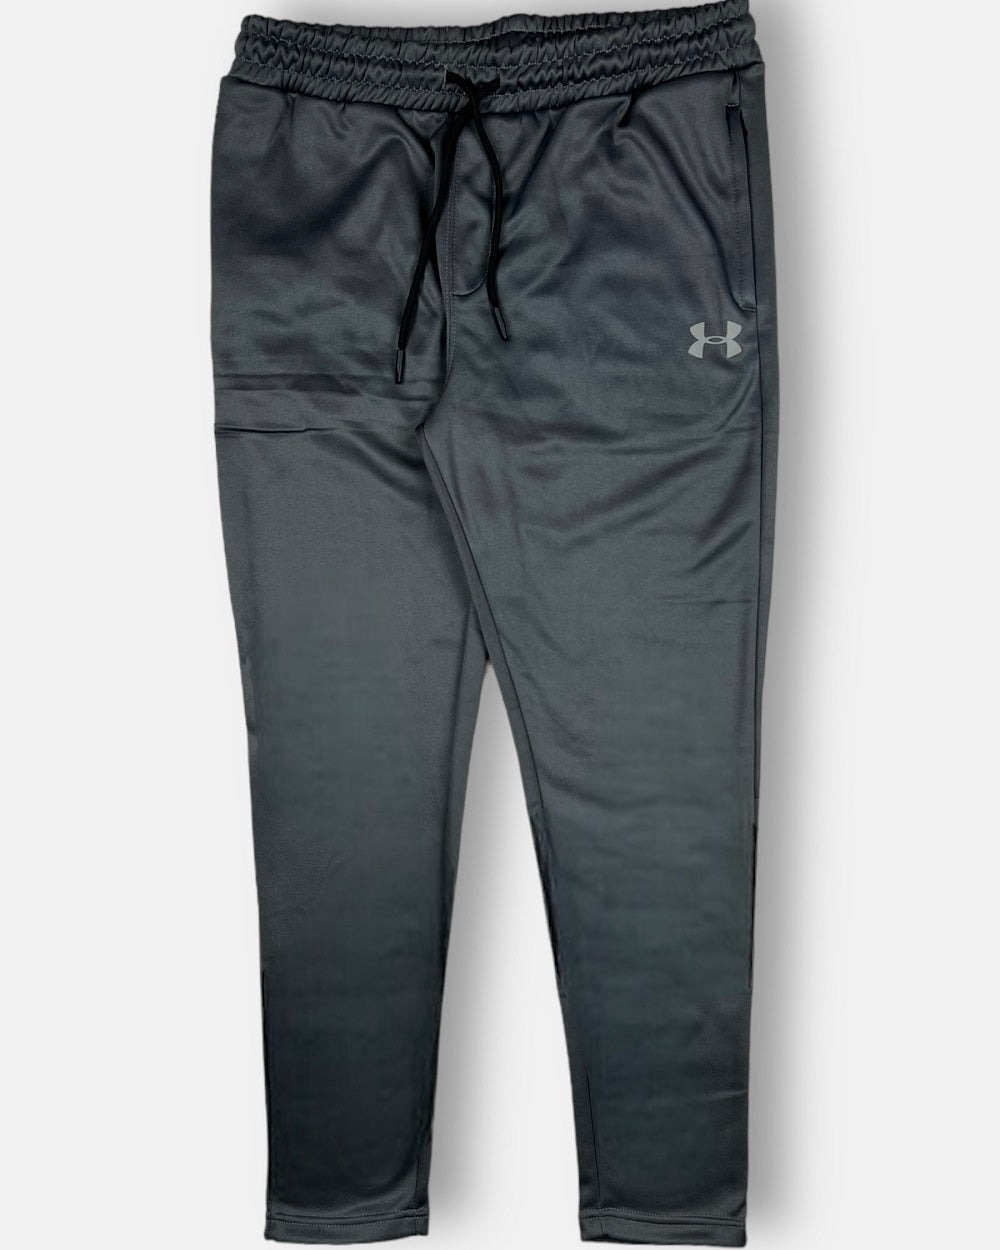 UA Imported polyester Fleece Tracksuit (Dark grey)